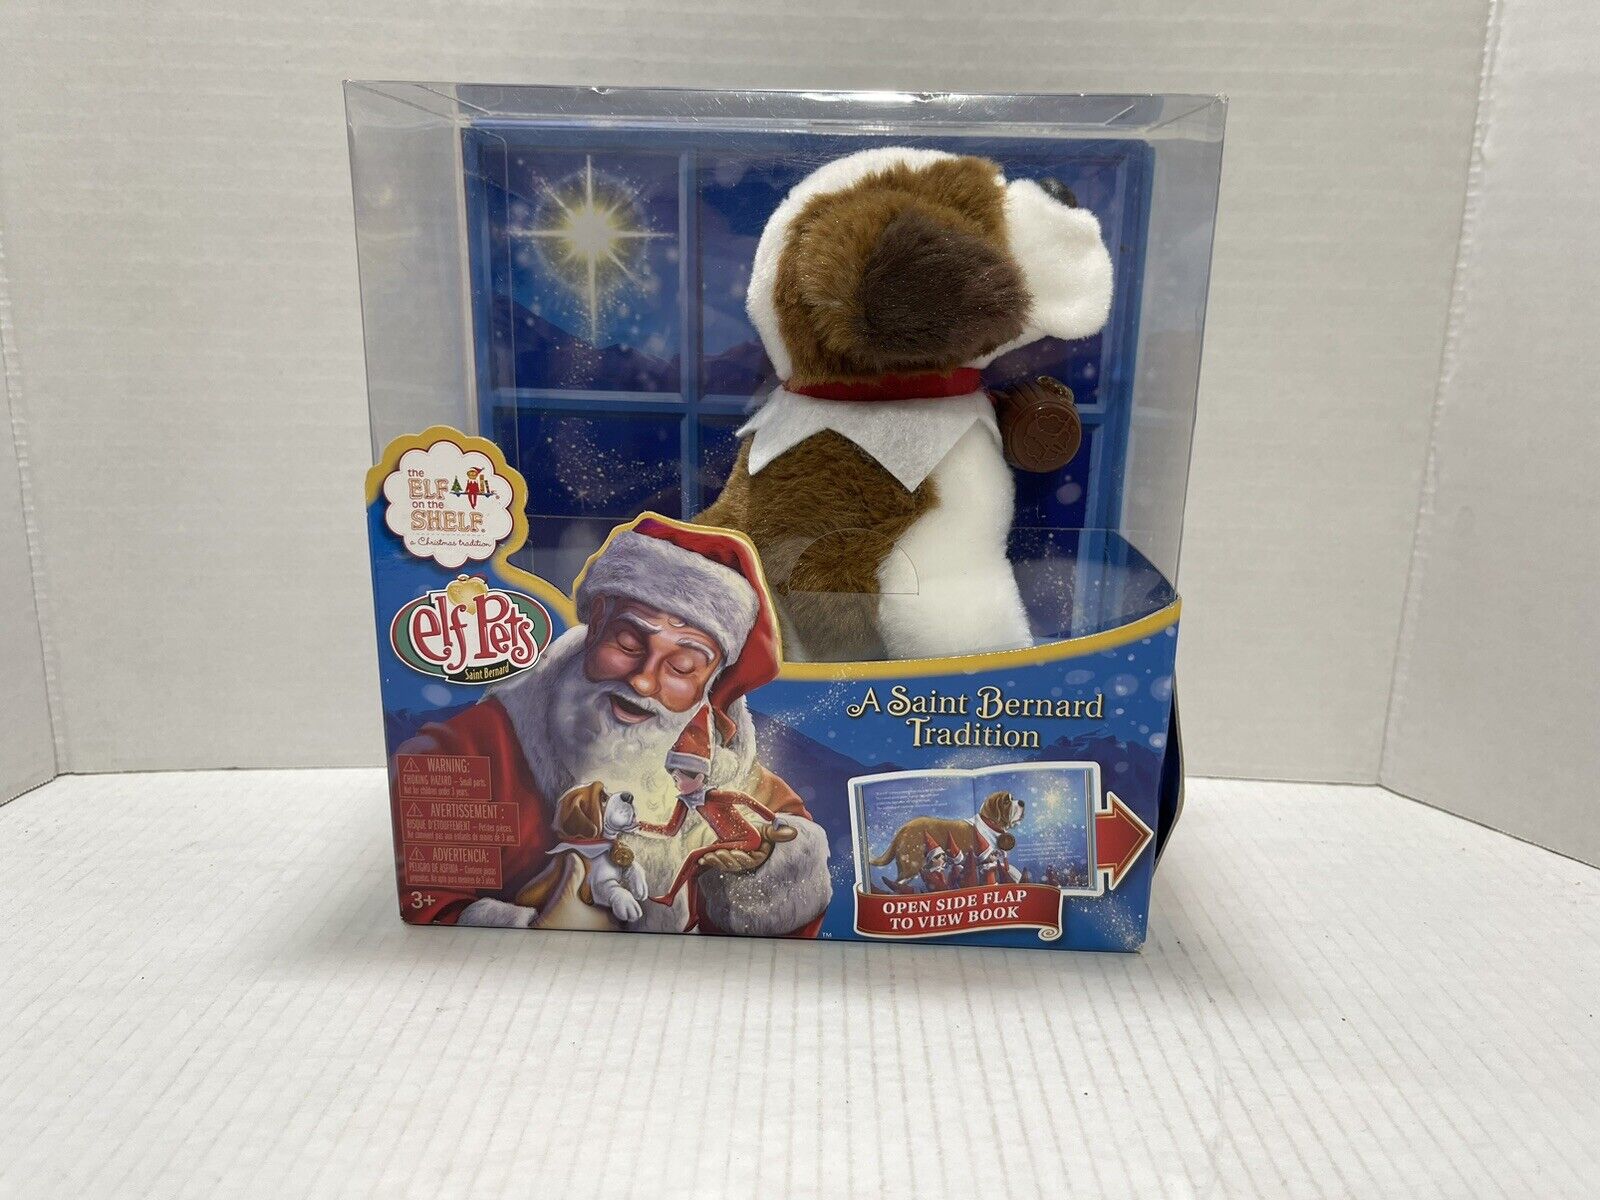 Elf on the Shelf Pets: St. Bernard Plush and Storybook - NEW